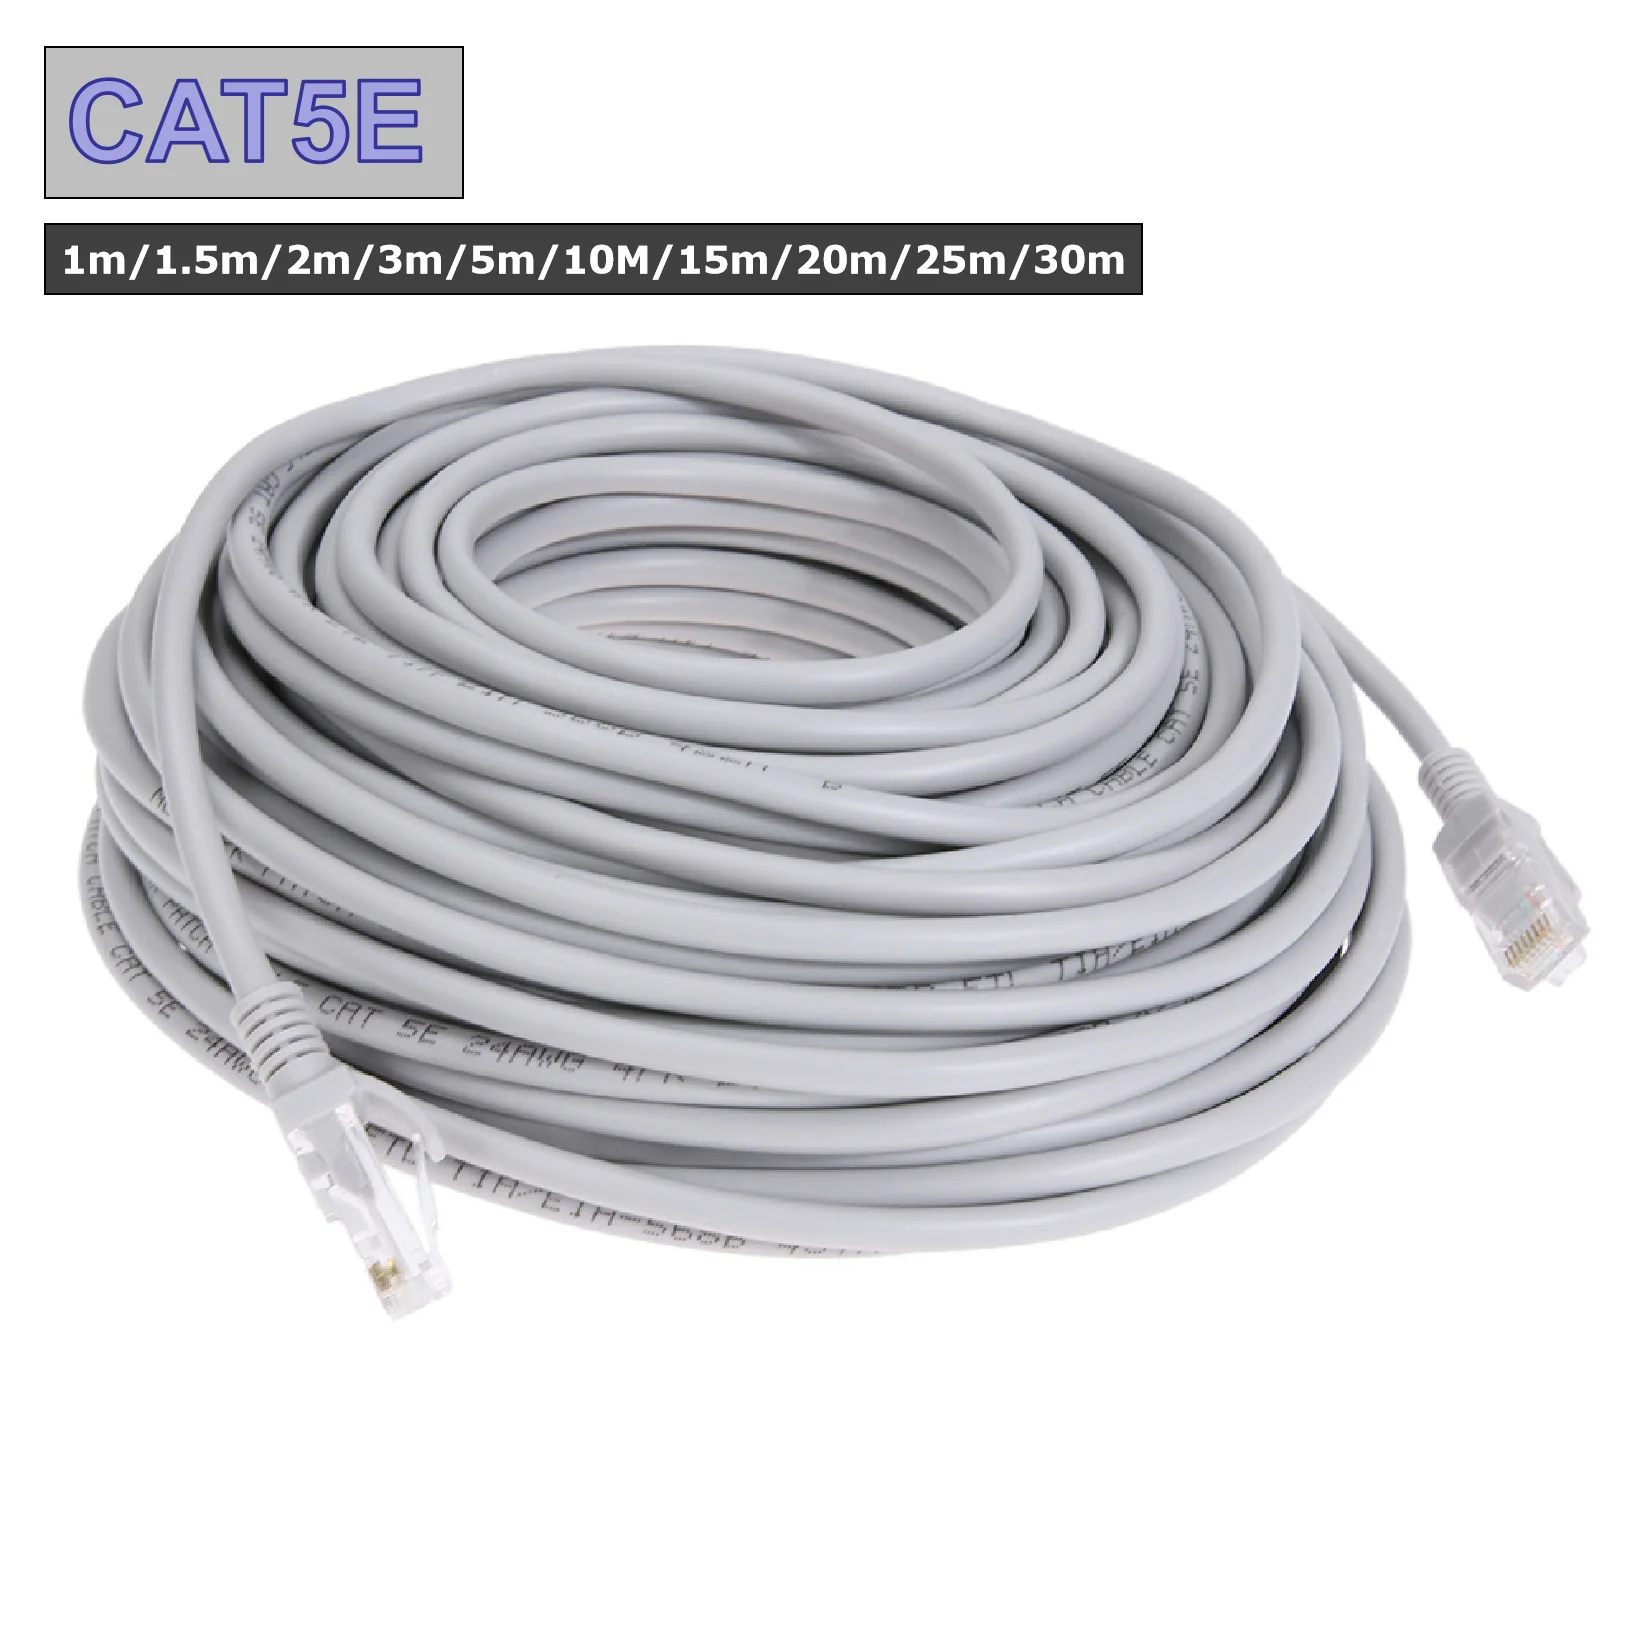 

Ethernet Cable High Speed Cat5e RJ45 Network LAN Cable Computer Cable for Computer Router 1m/1.5m/2m/3m /5m/10M/15m/20m/25m/30m